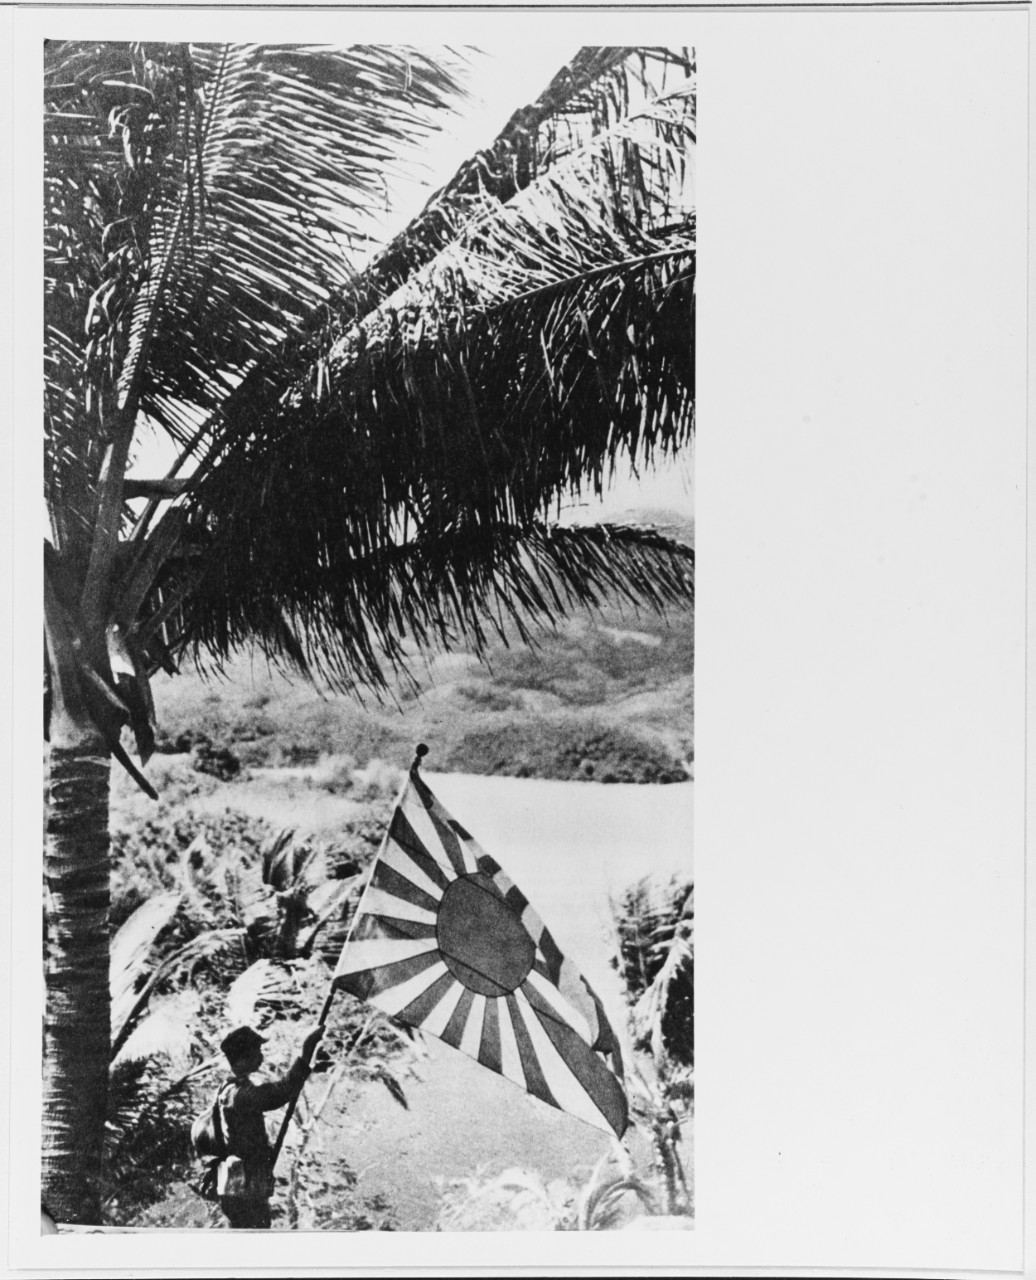 Invasion of the Philippines, 1941-1942.